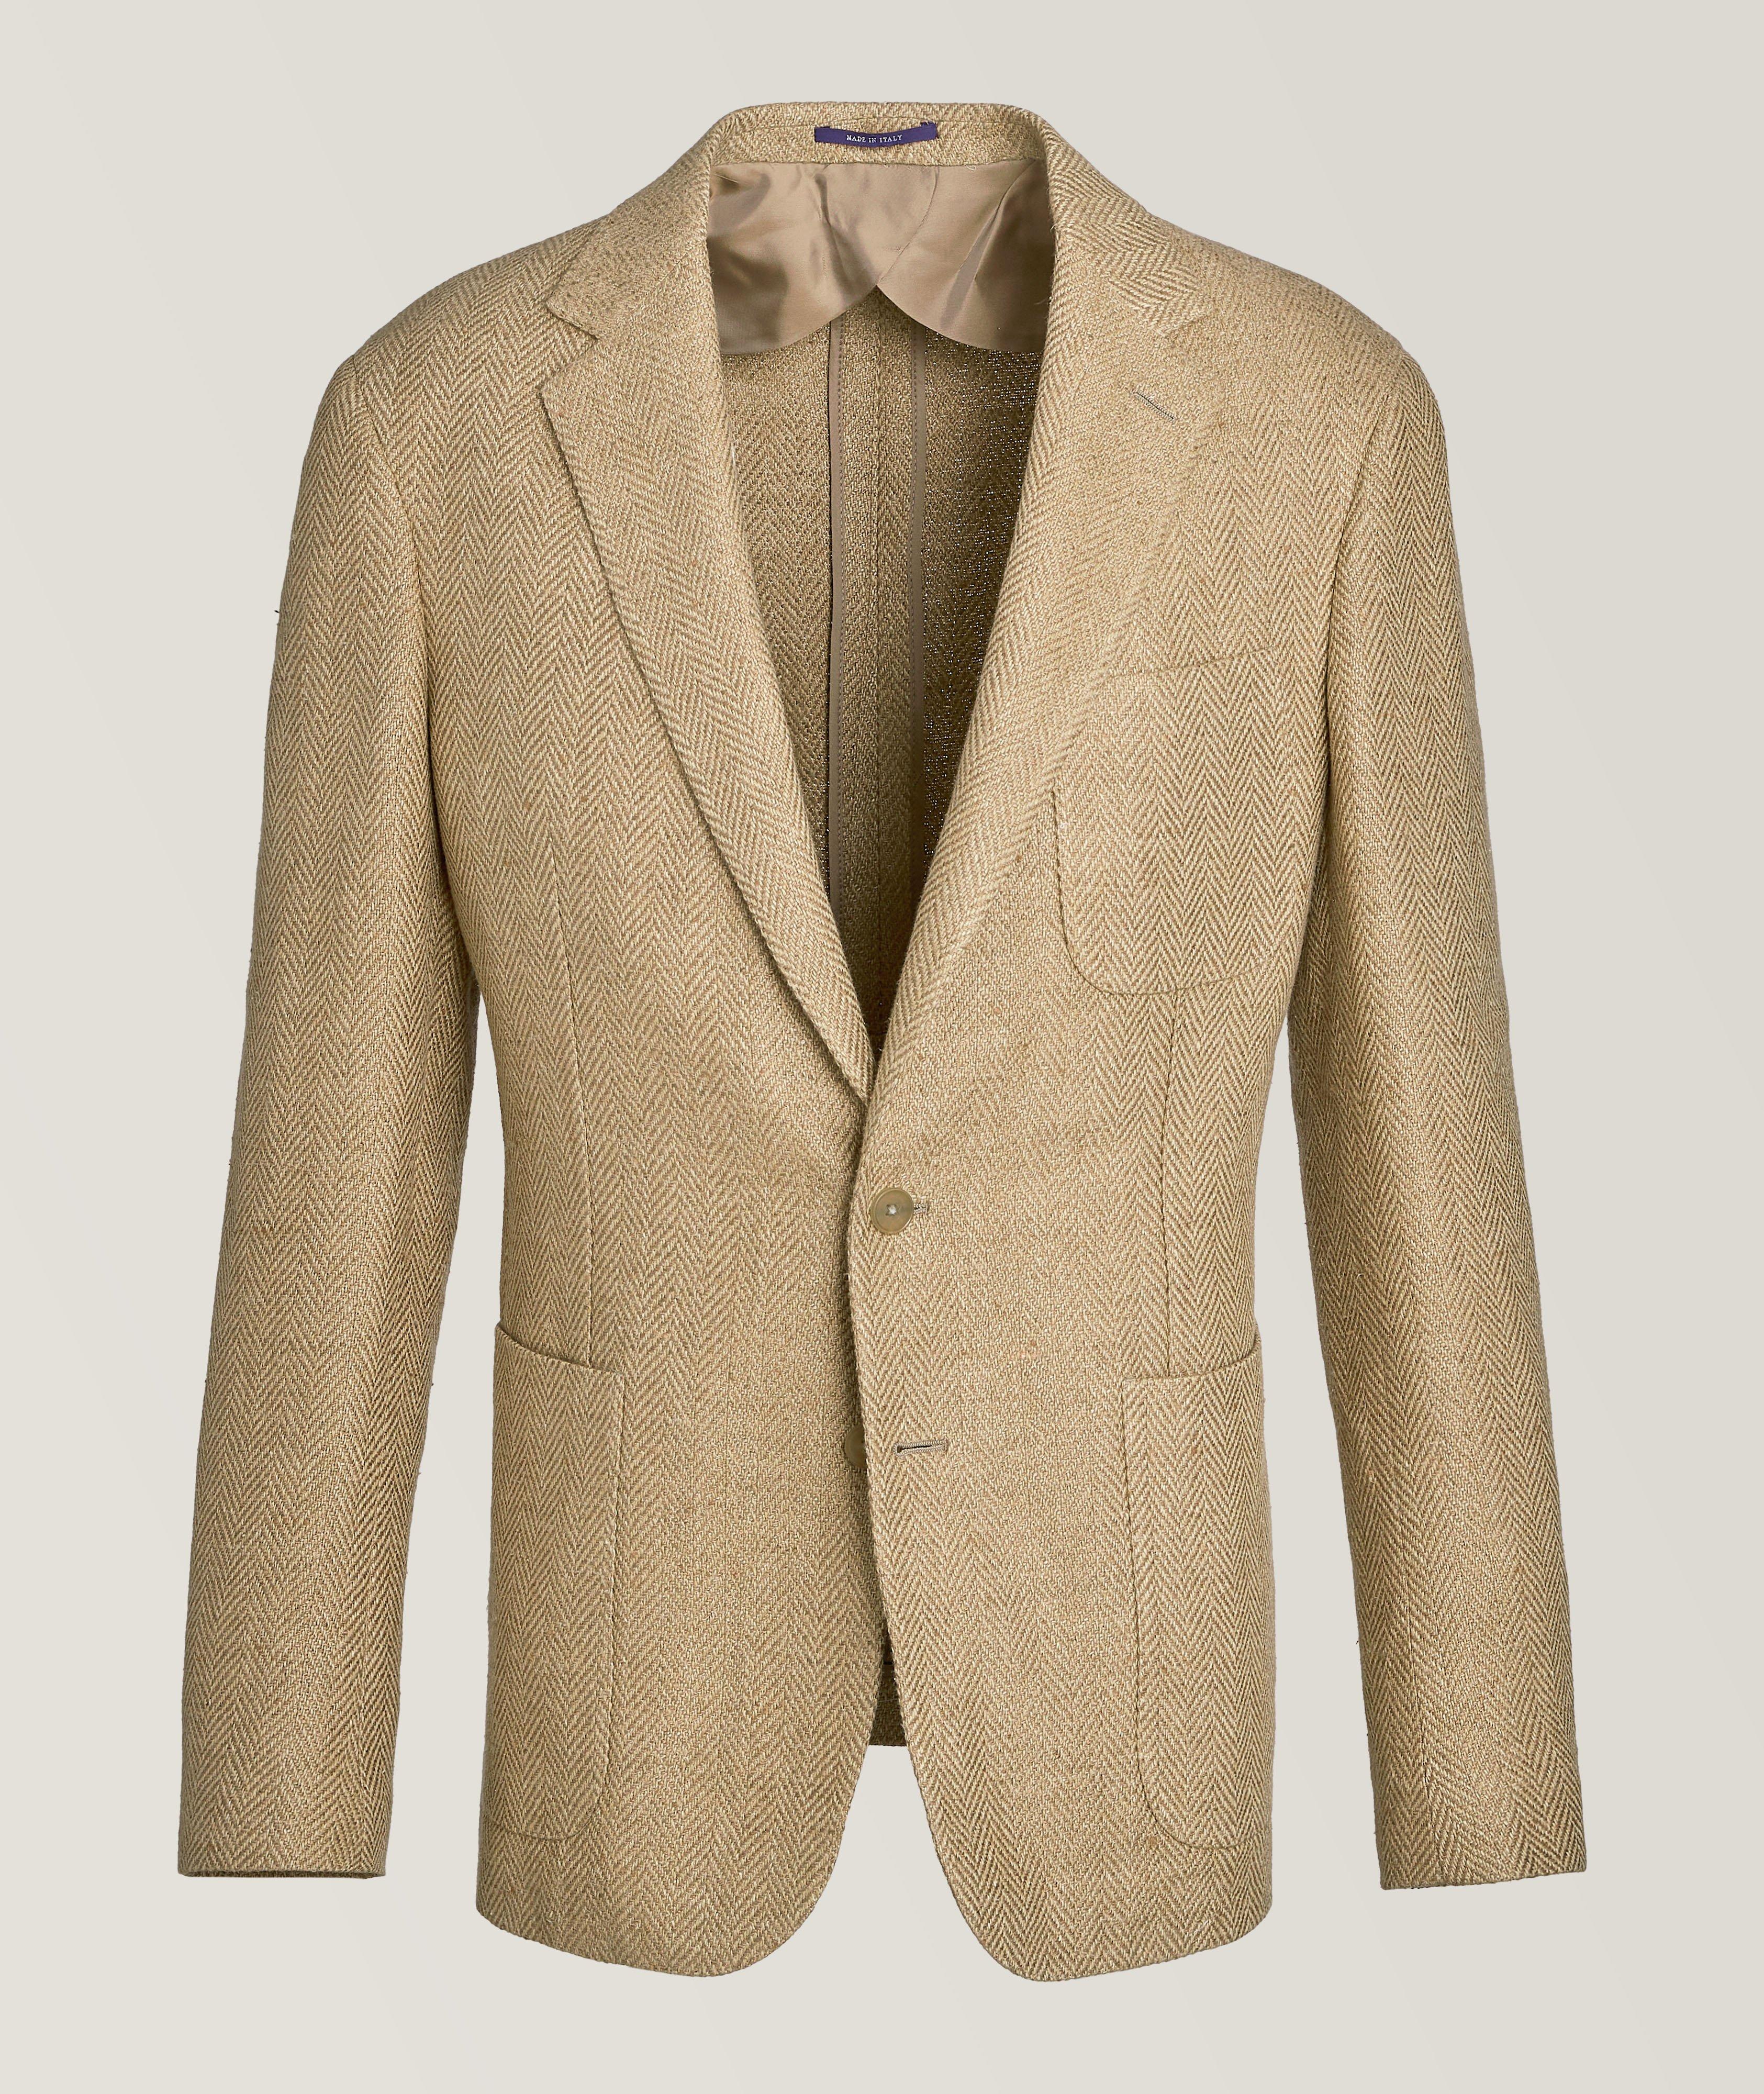 Textured Herringbone Linen, Silk & Wool Sport Jacket  image 0